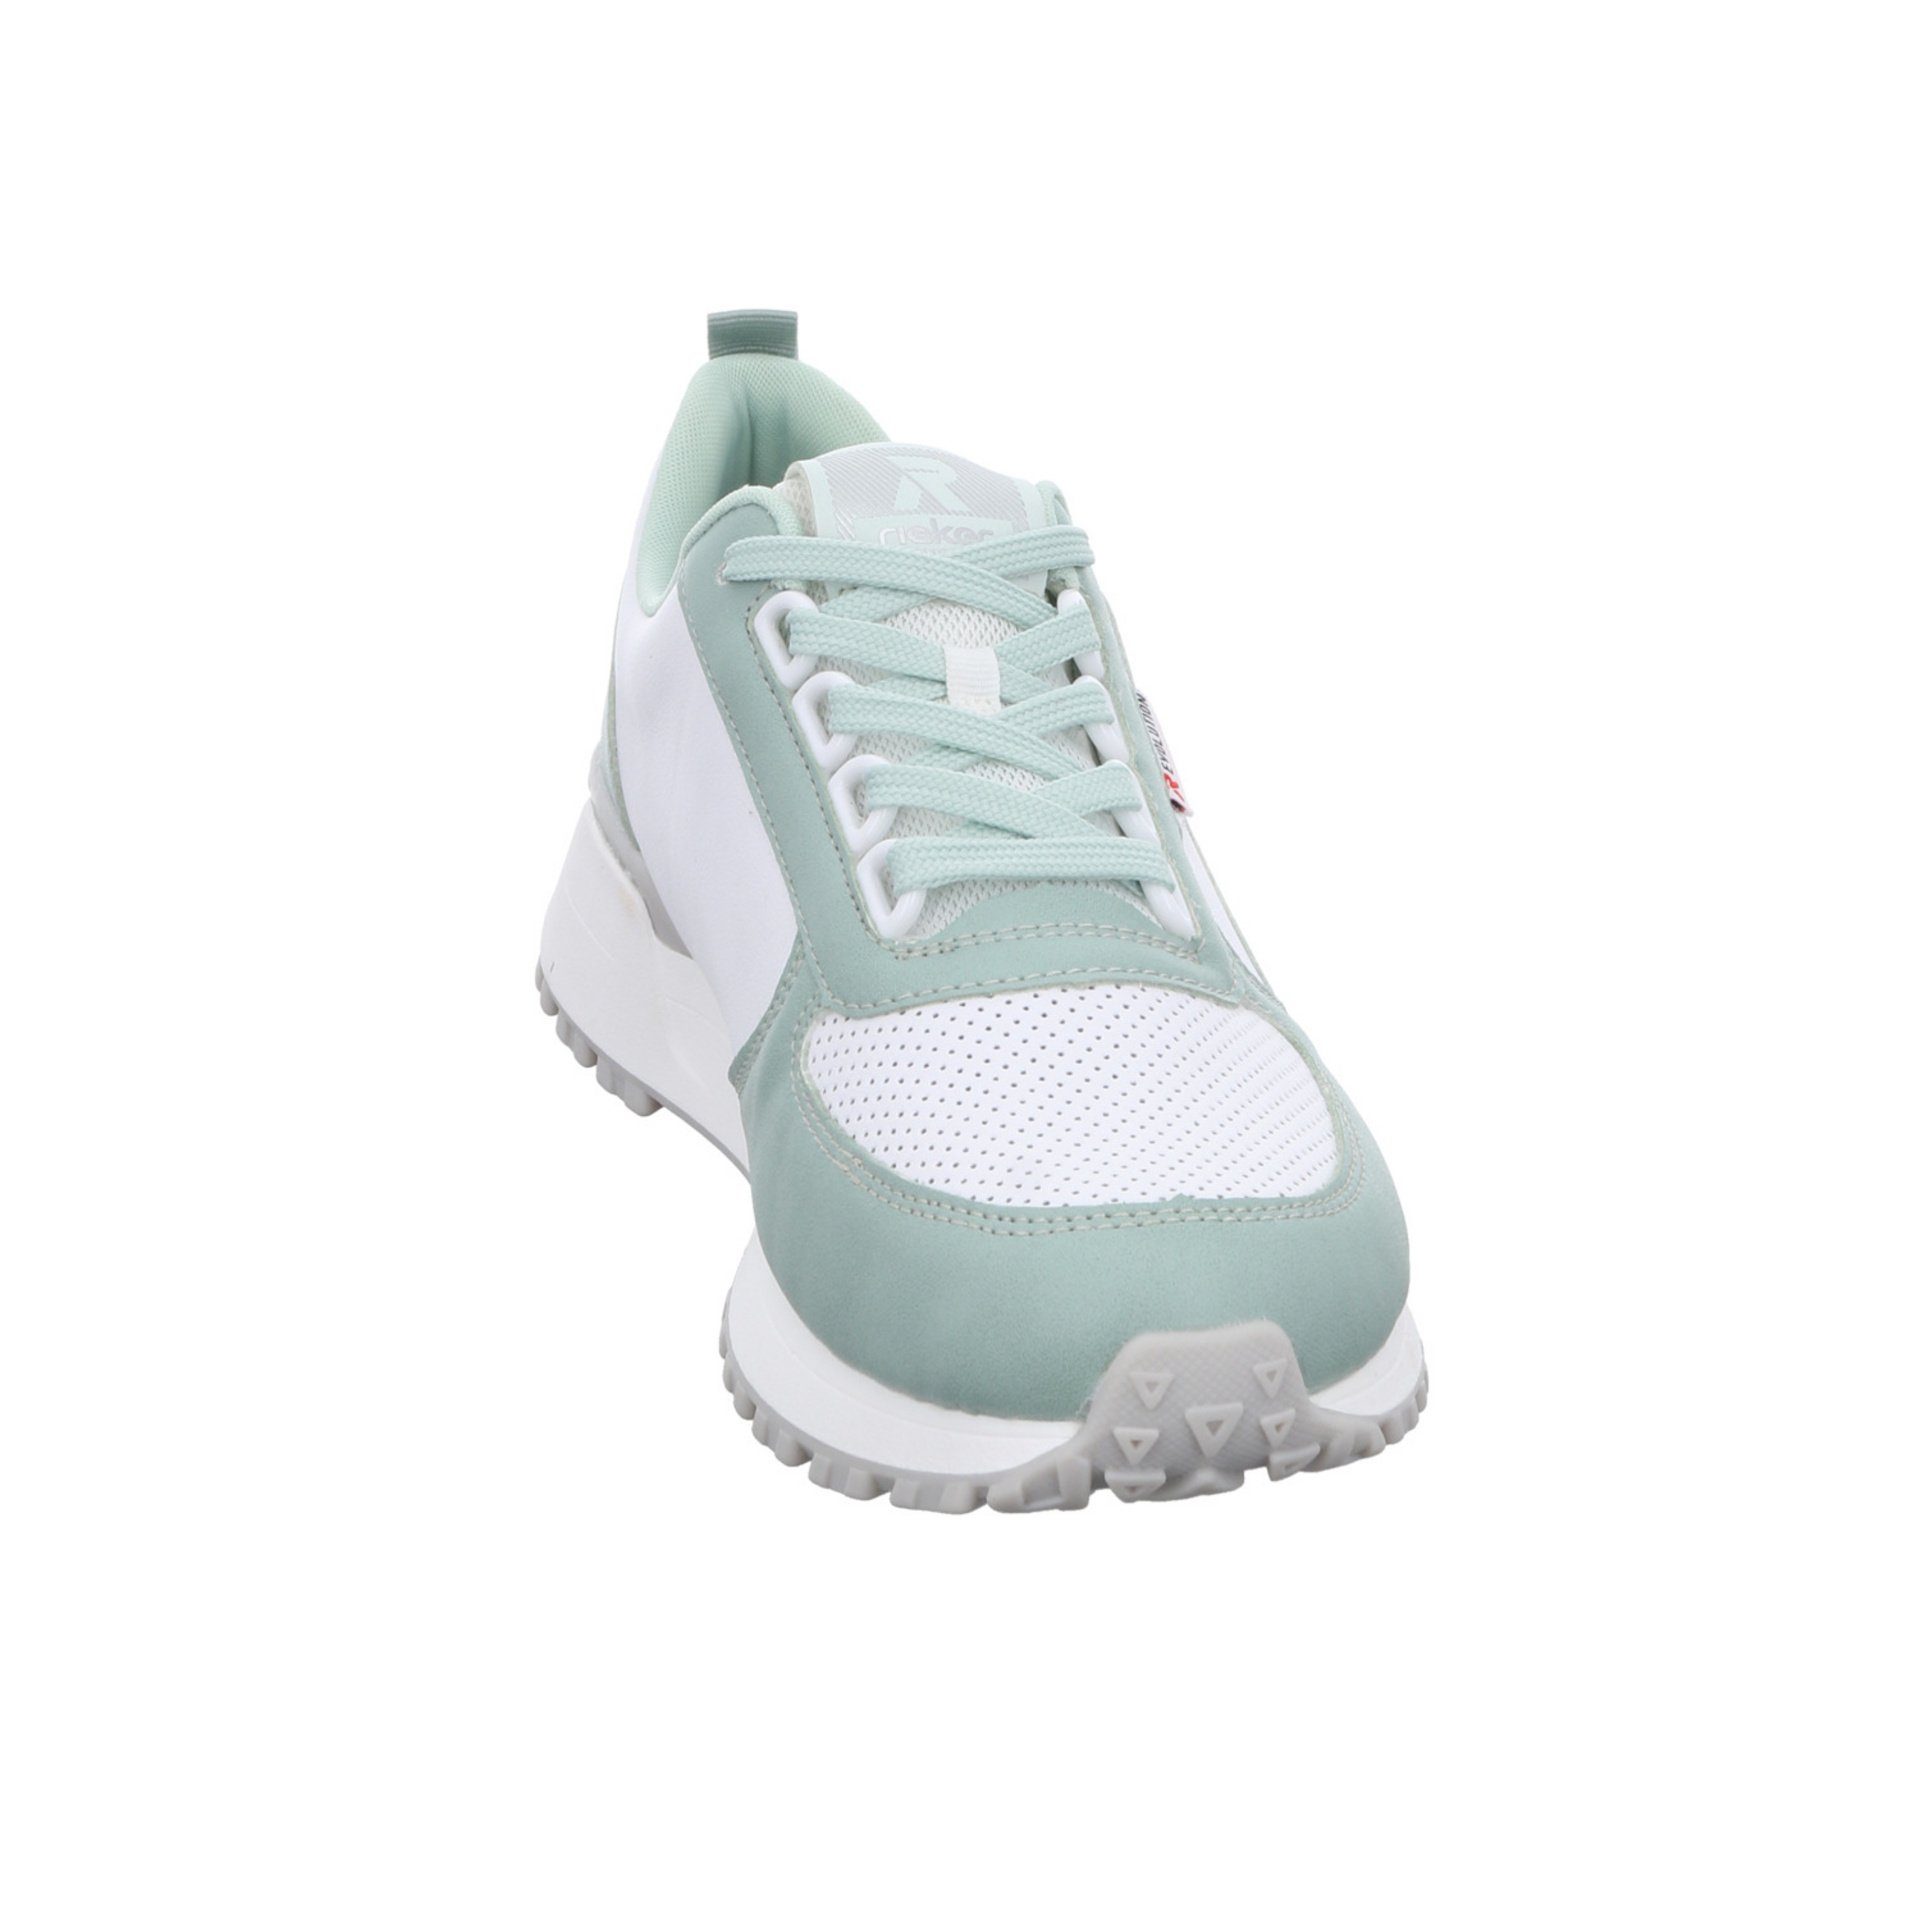 Rieker Damen Sneaker Schuhe R-Evolution peppermint/sportweiss/weiss/pa Leder-/Textilkombination Sneaker Sneaker